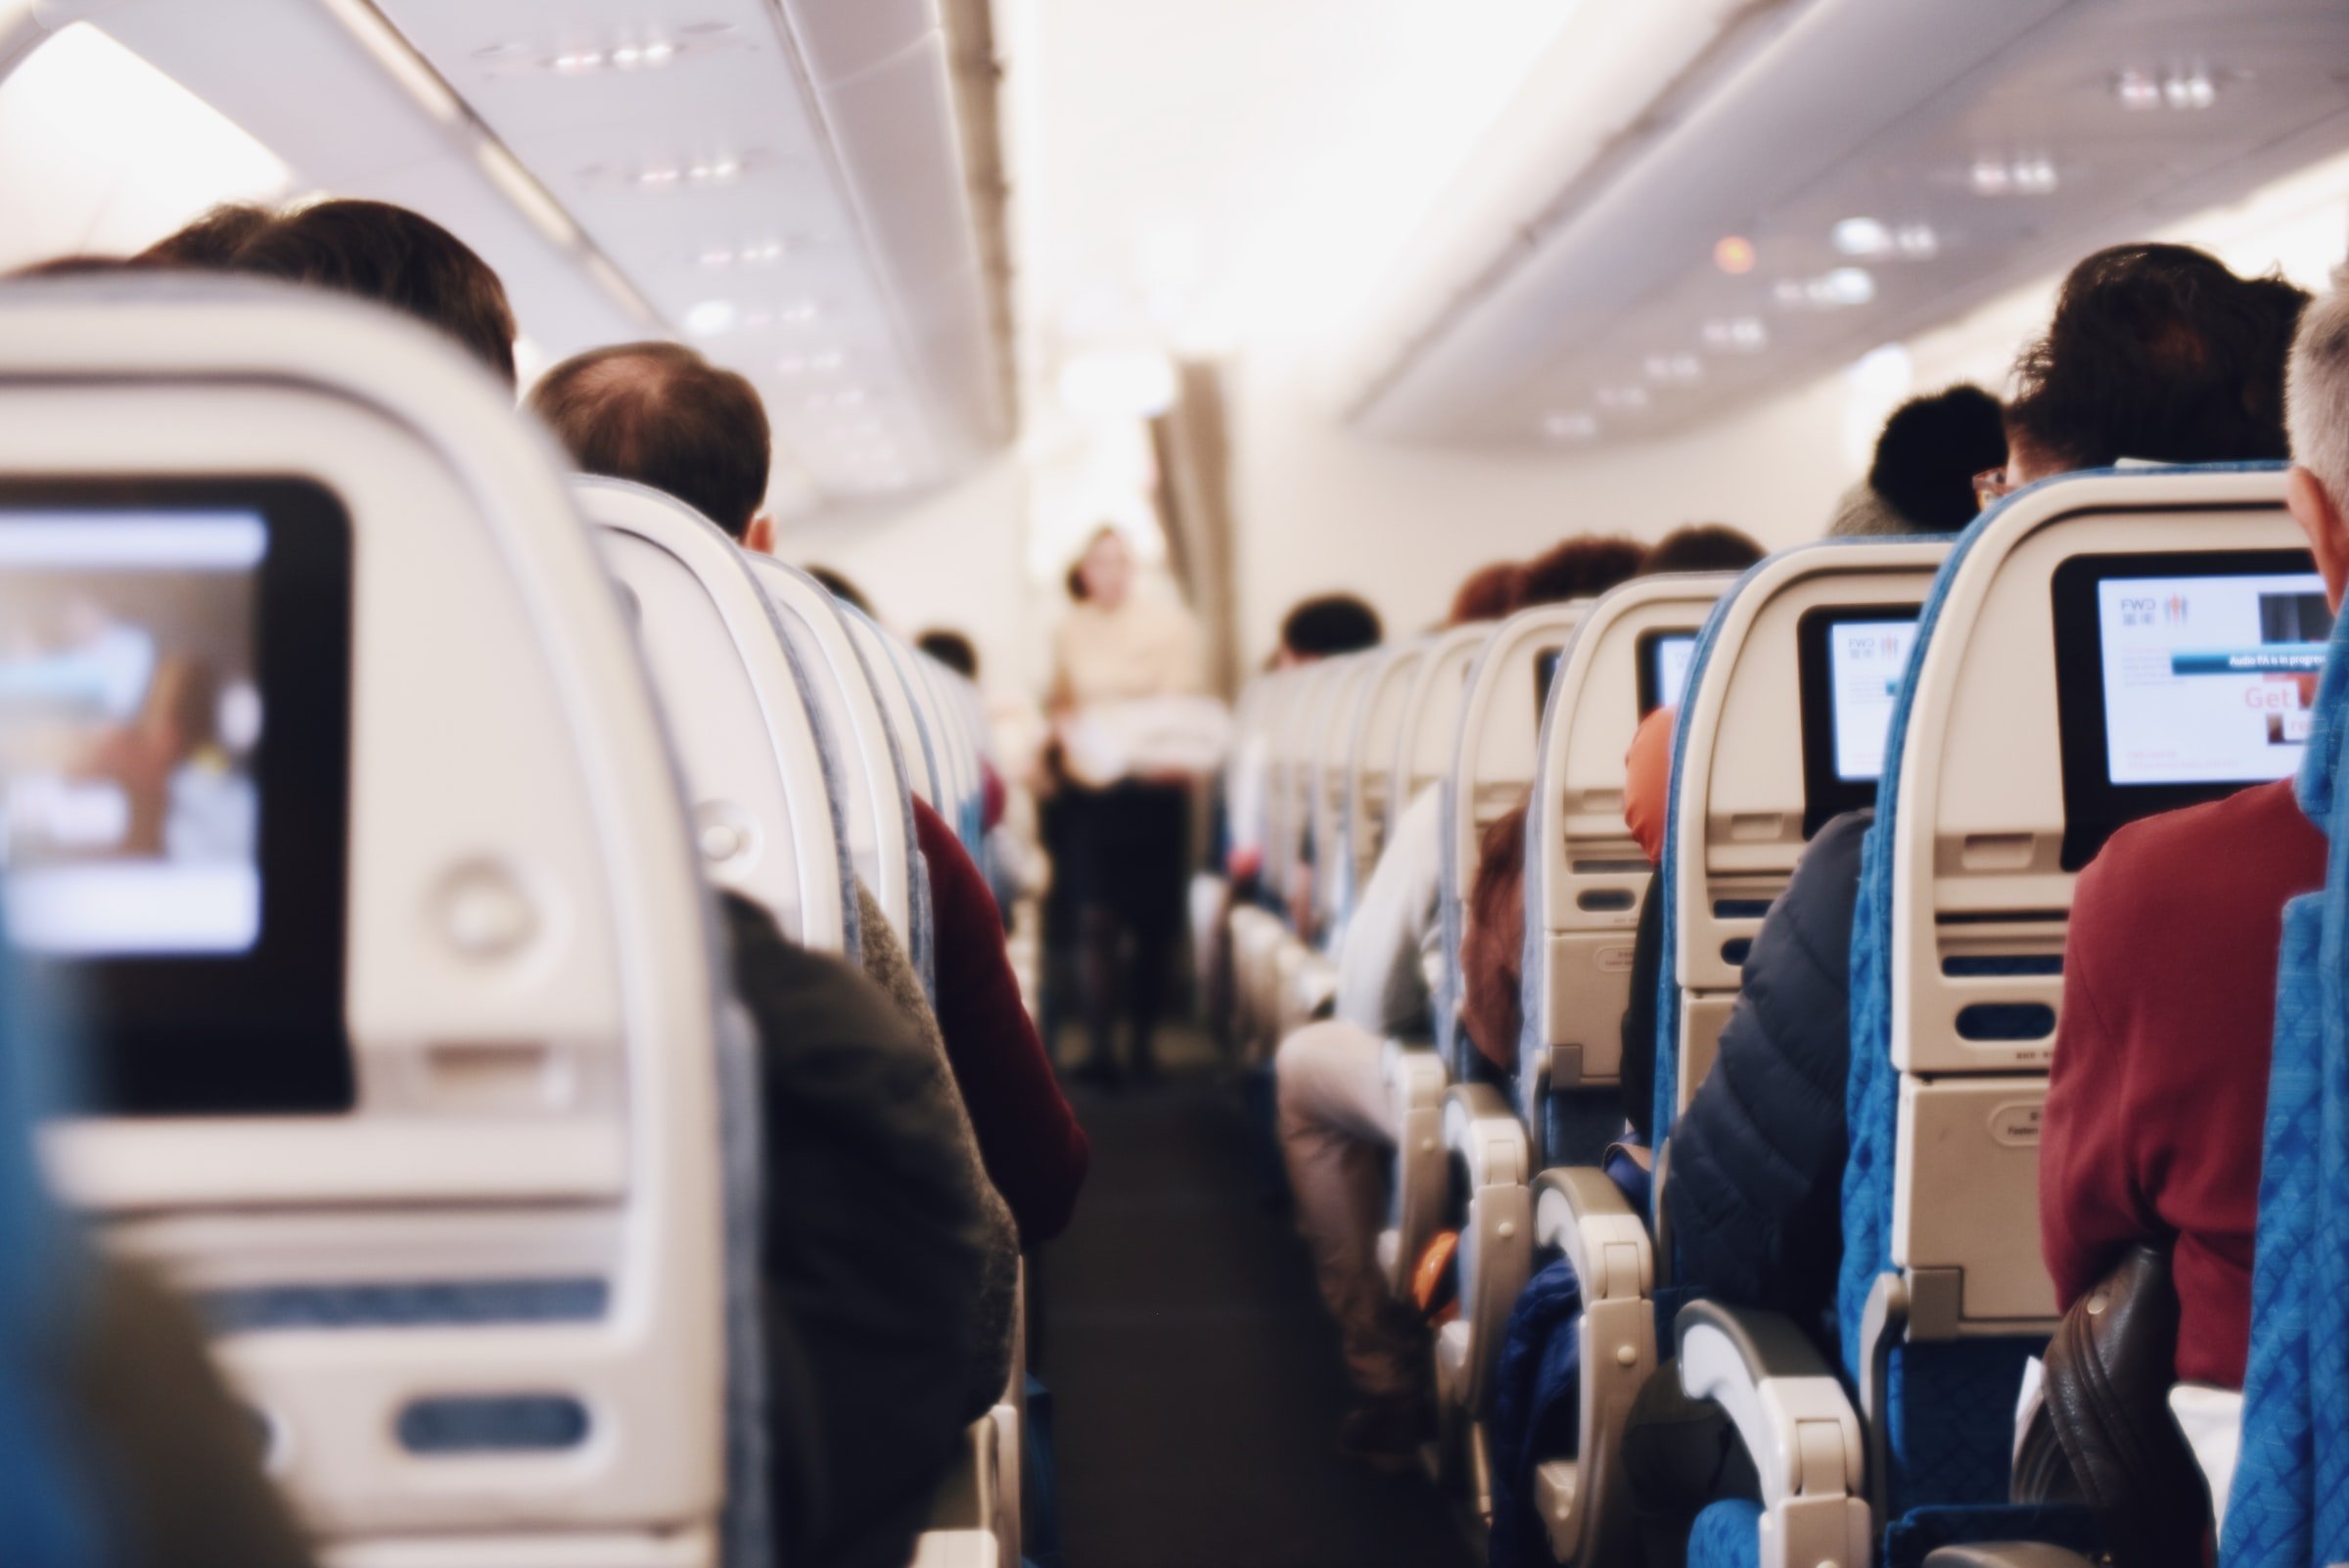 Passengers in an airplane. | Source: Unsplash